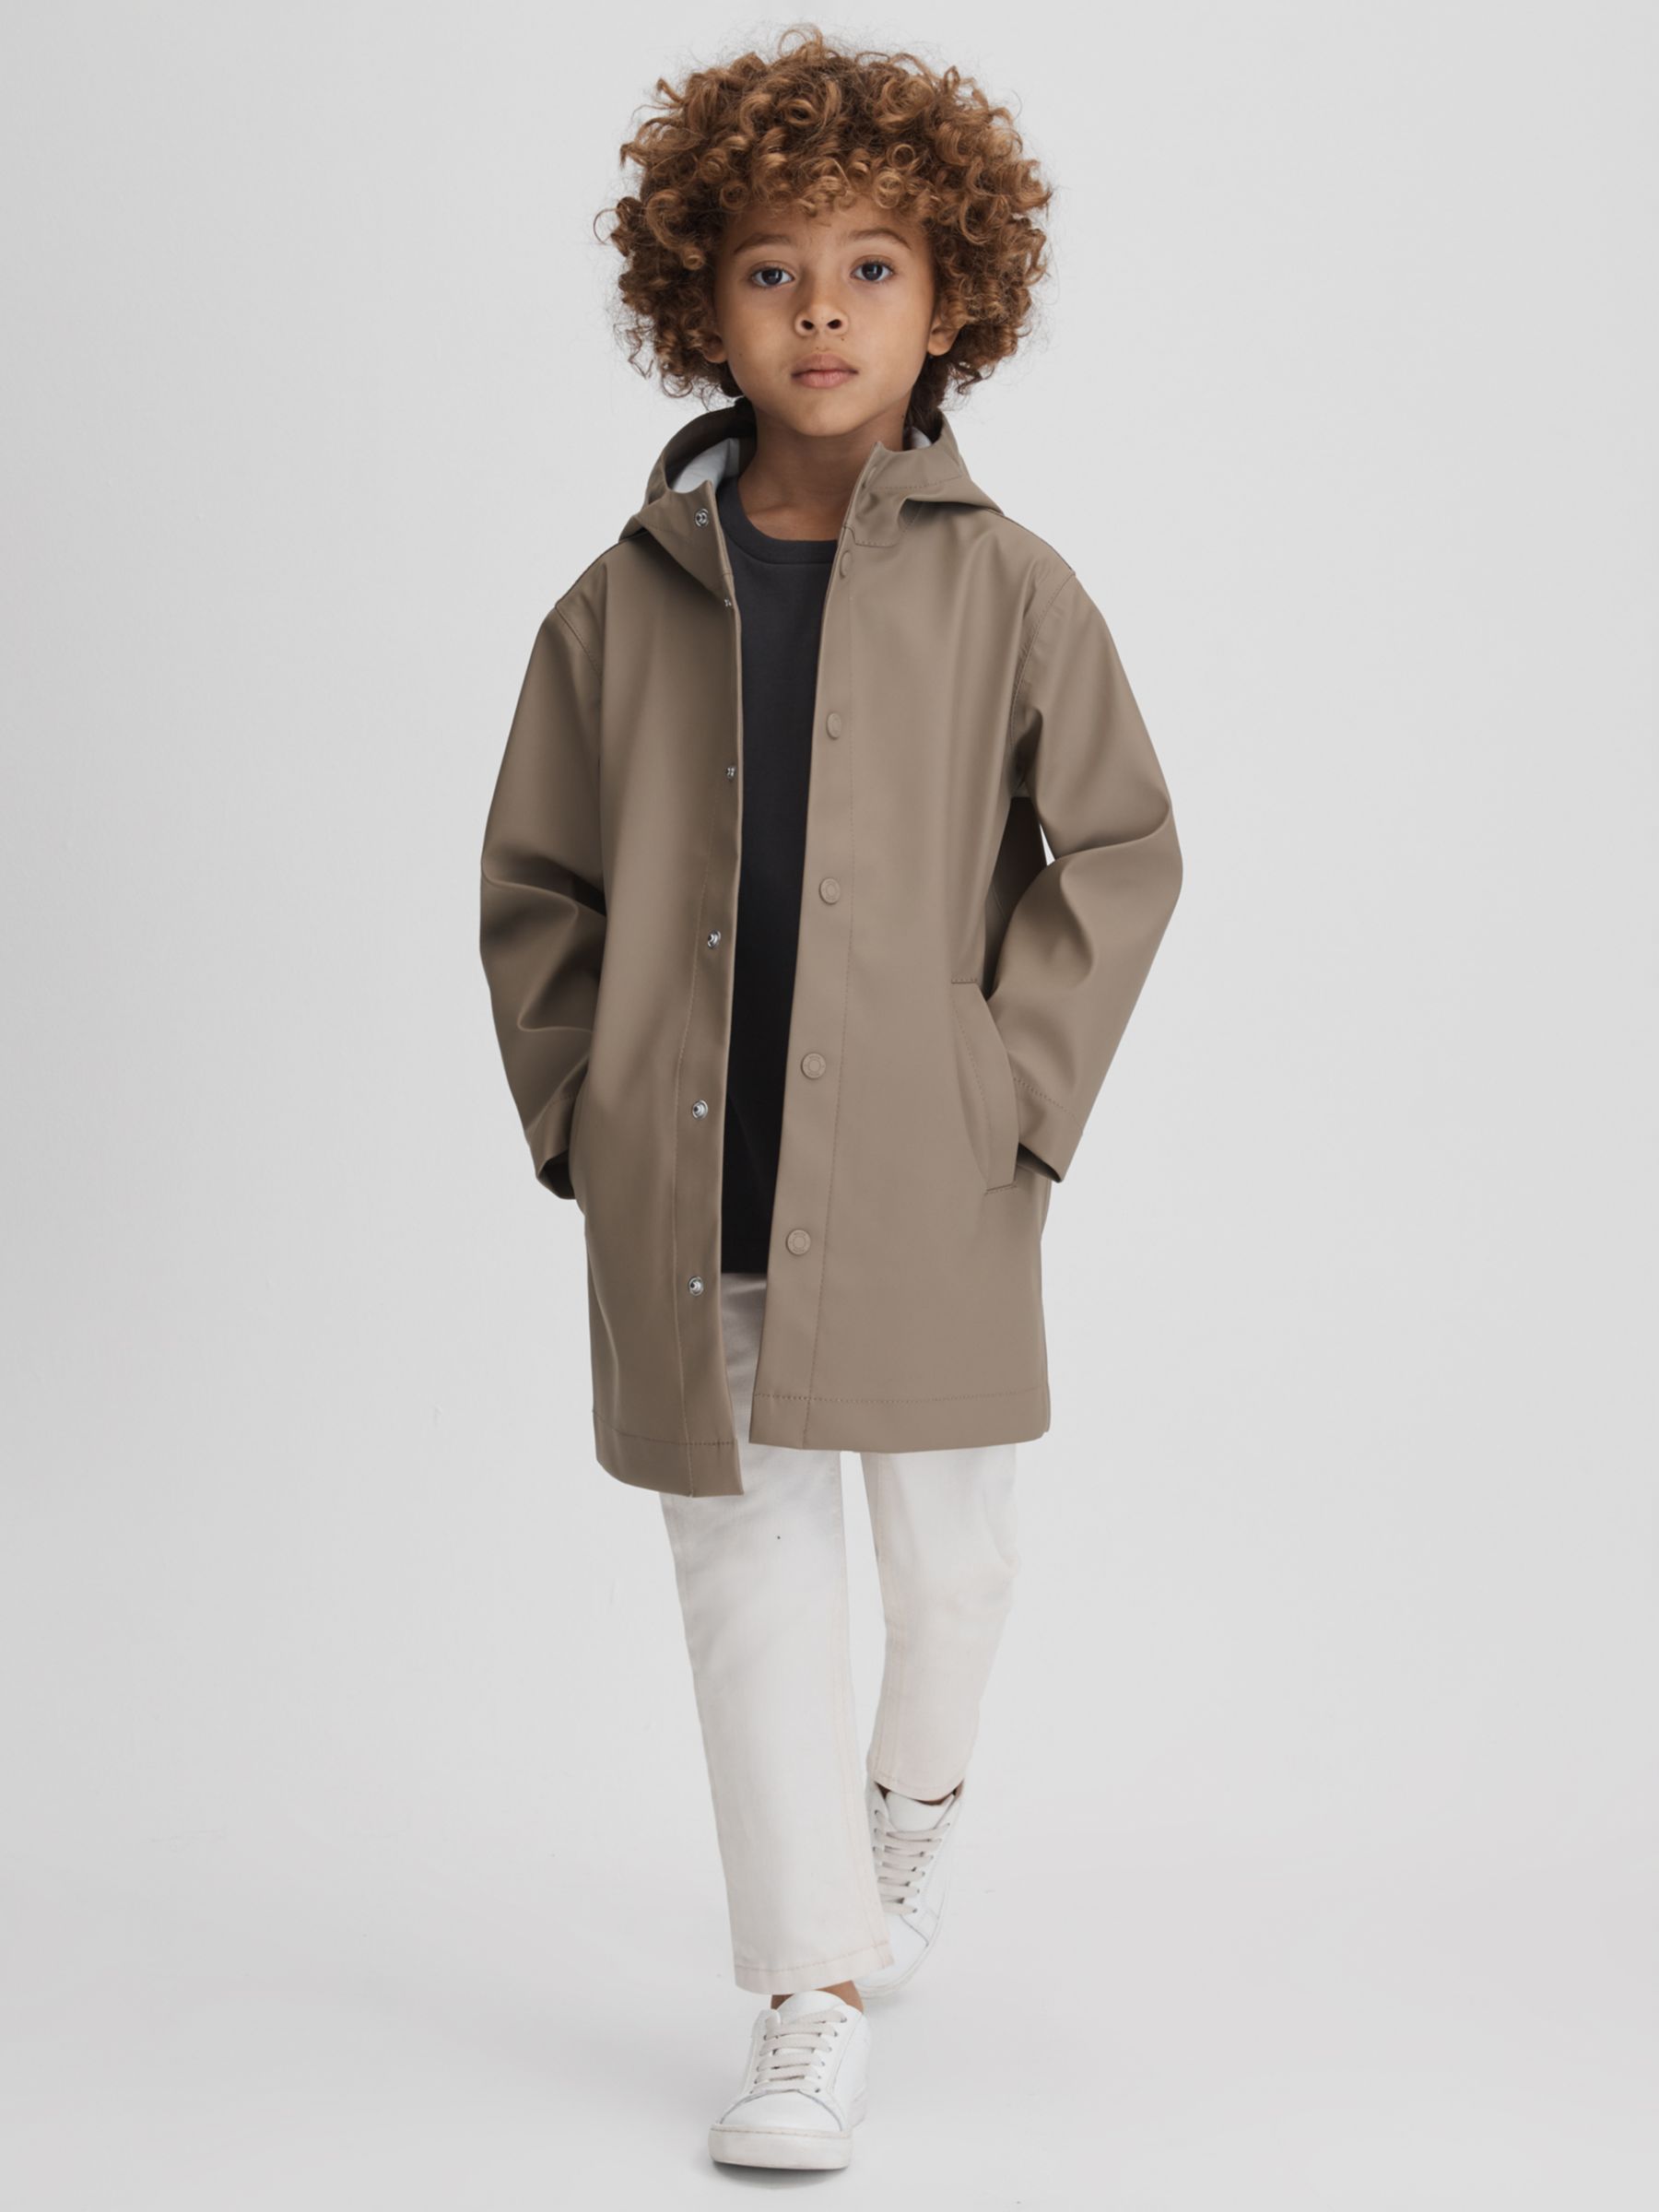 Reiss Kids' Eero Water Repellent Hooded Coat, Stone, 4-5 years